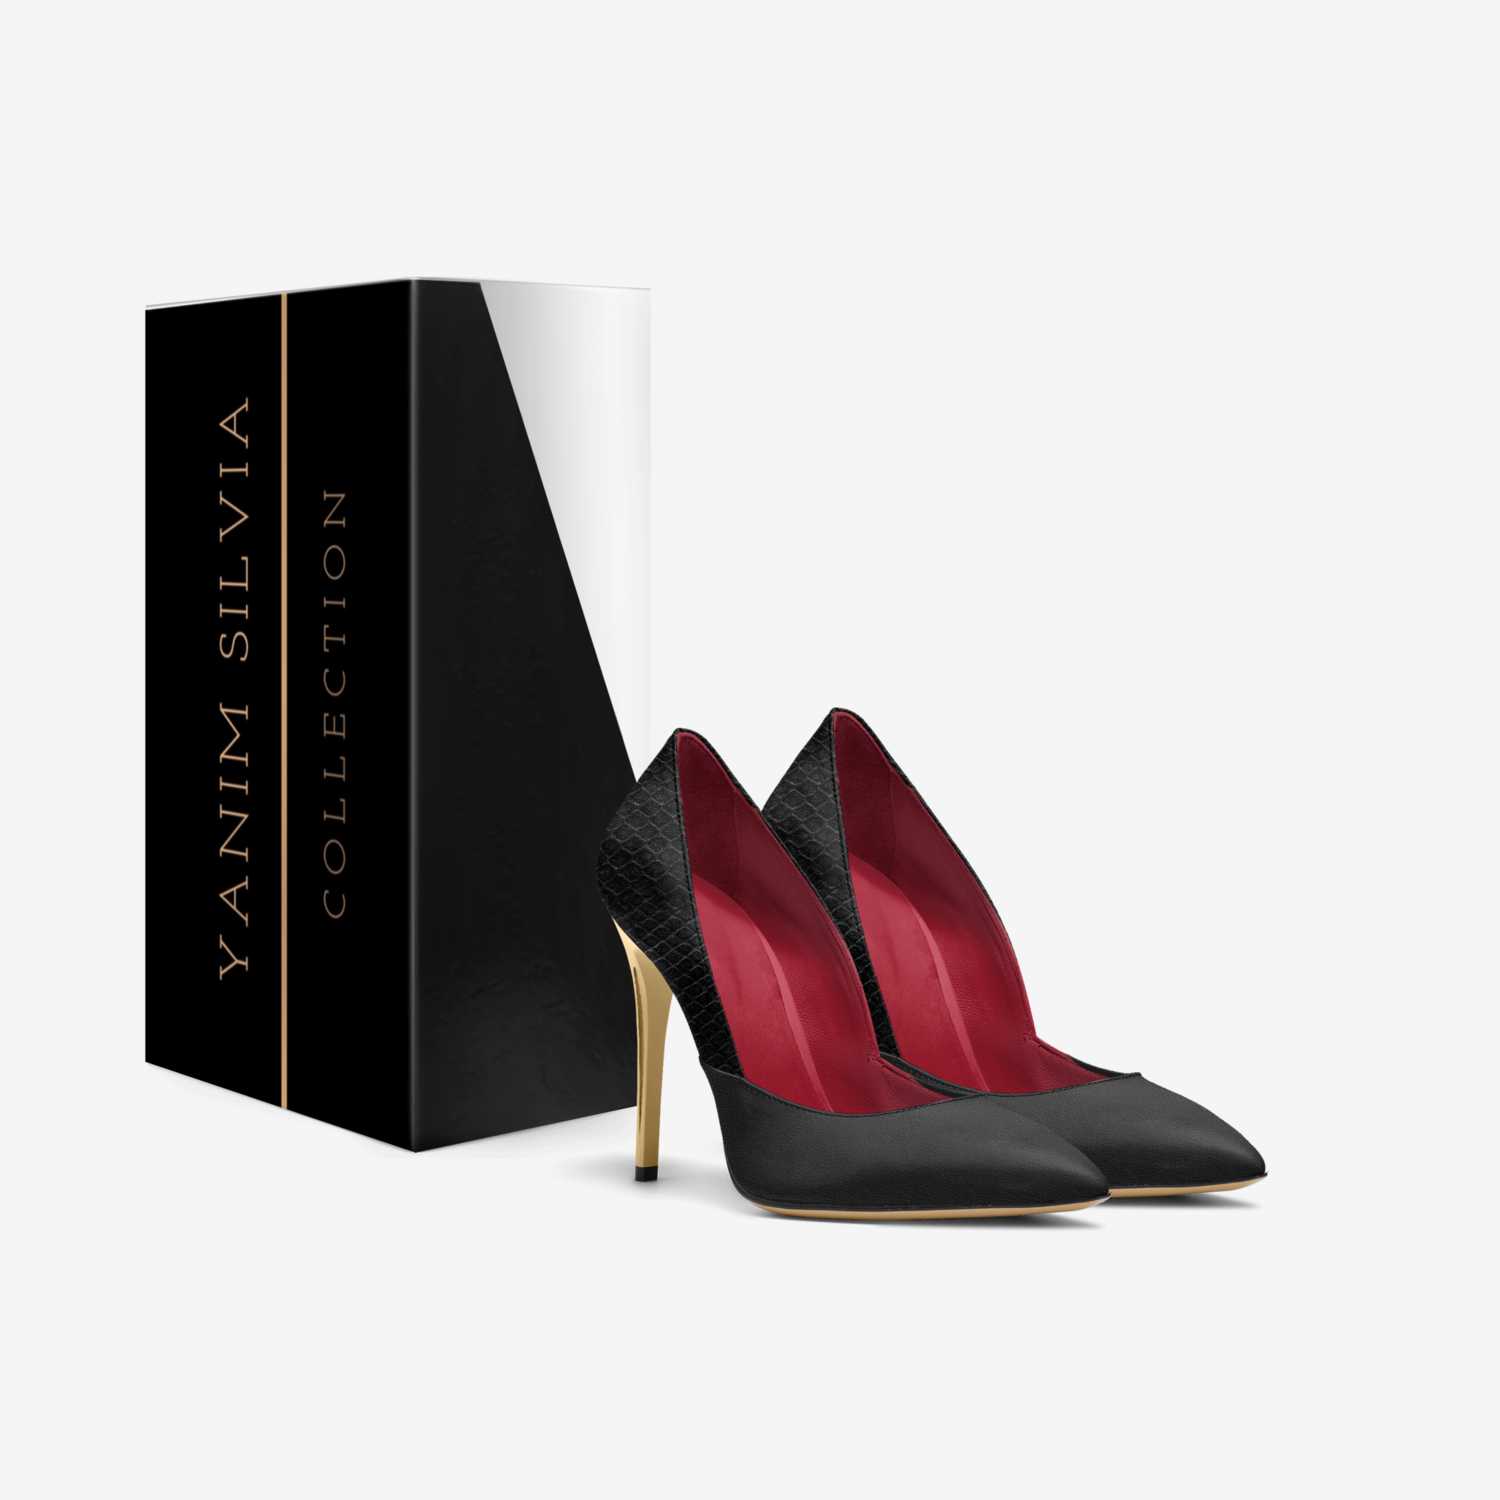 Octavia custom made in Italy shoes by Yanim Silvia | Box view